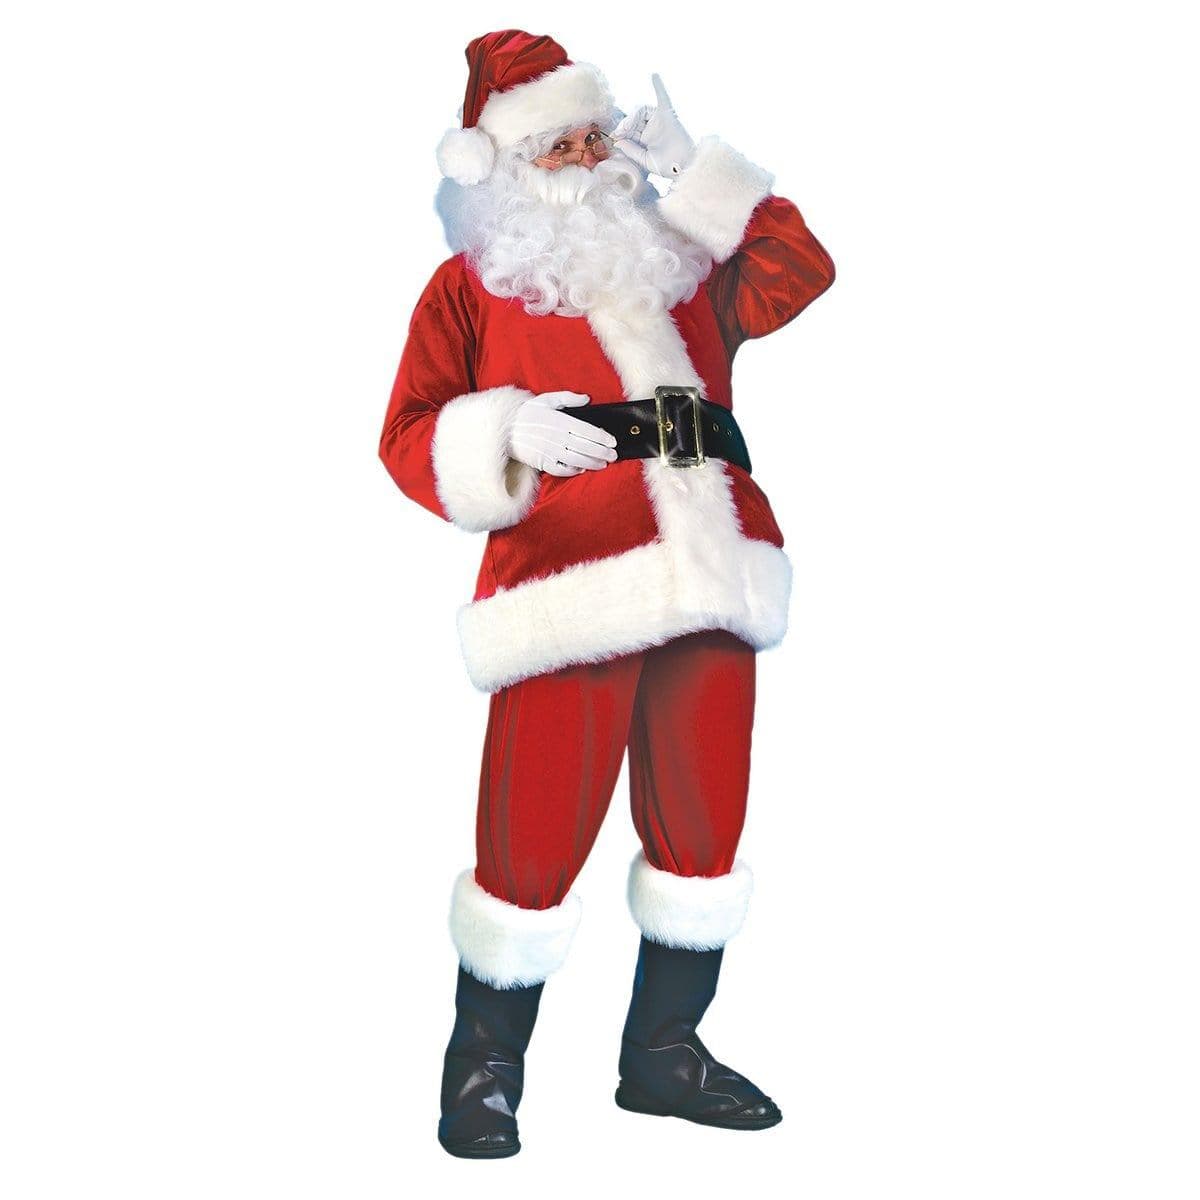 Buy Christmas Deluxe Velvet Santa Suit - Adult Standard sold at Party Expert